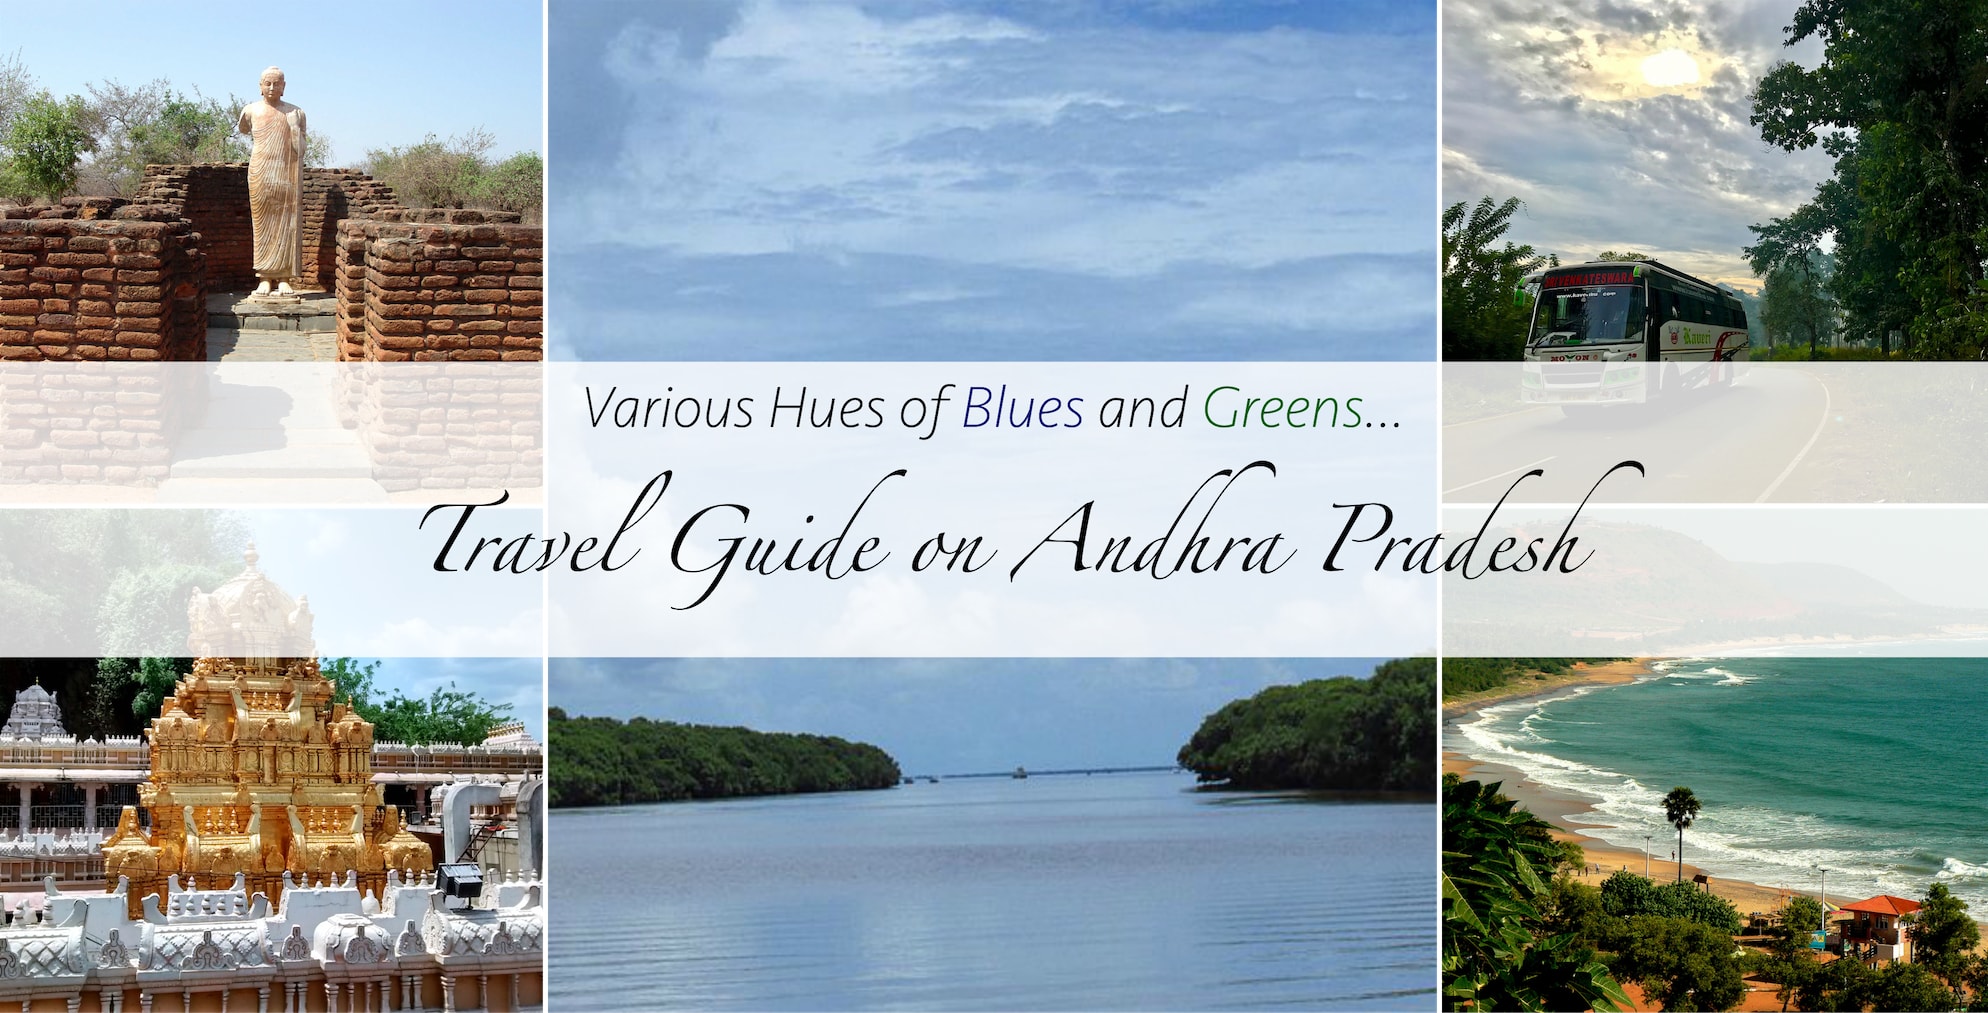 Andhra Pradesh Tourism-2.jpg